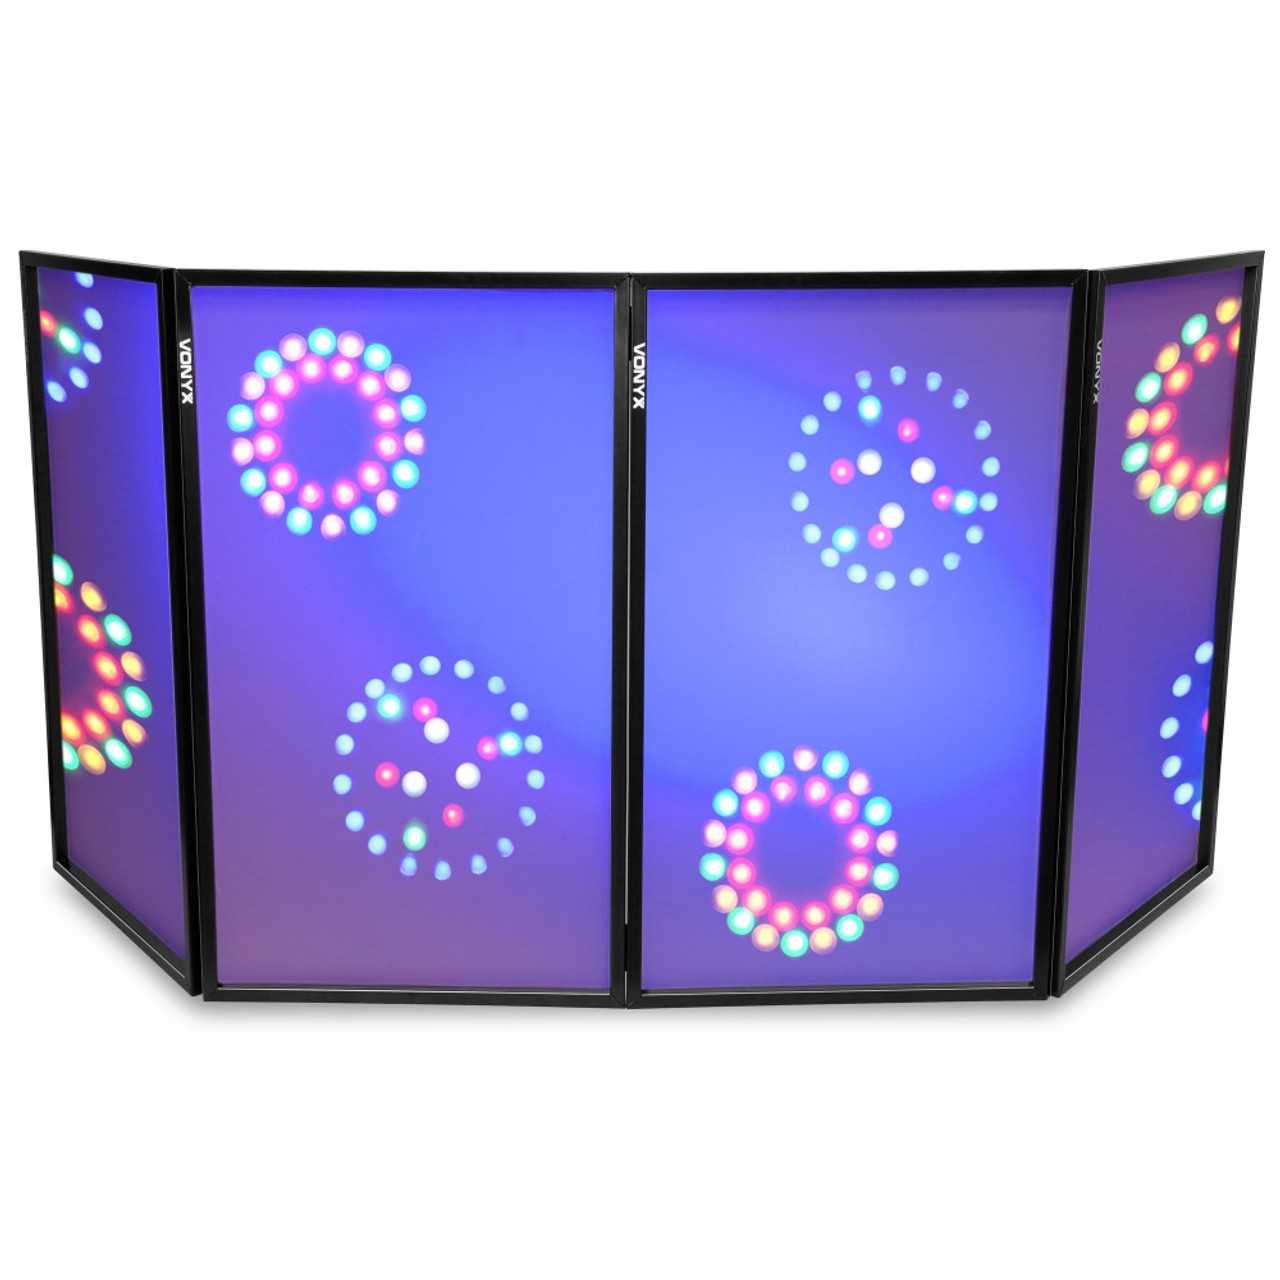 Vonyx DB2 Foldable DJ Screen (120x70cm Panels)